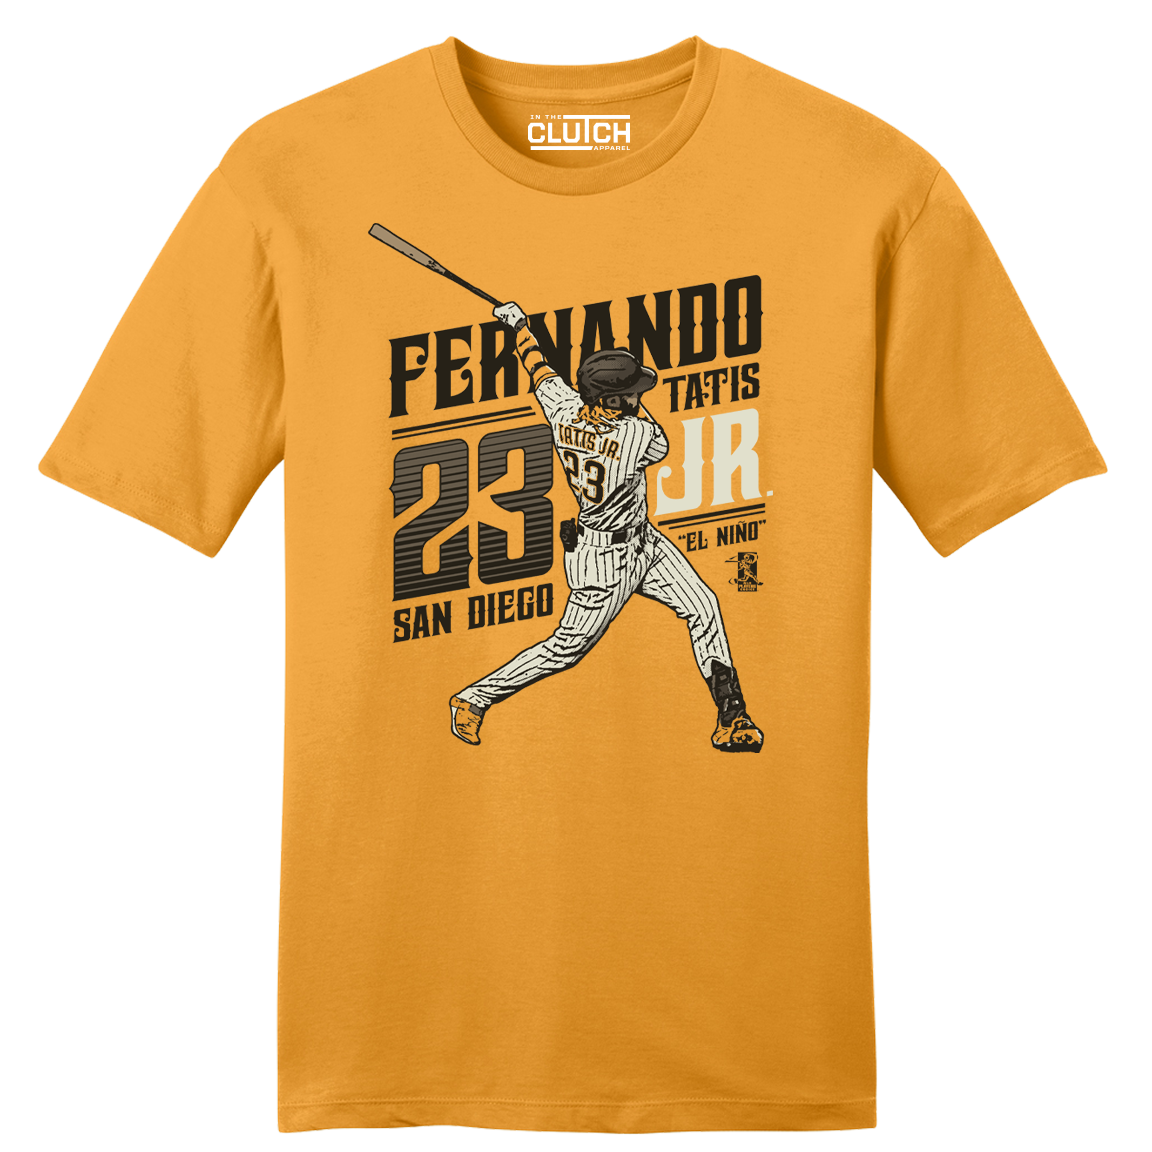 Official Fernando Tatis Jr. MLBPA T-shirt